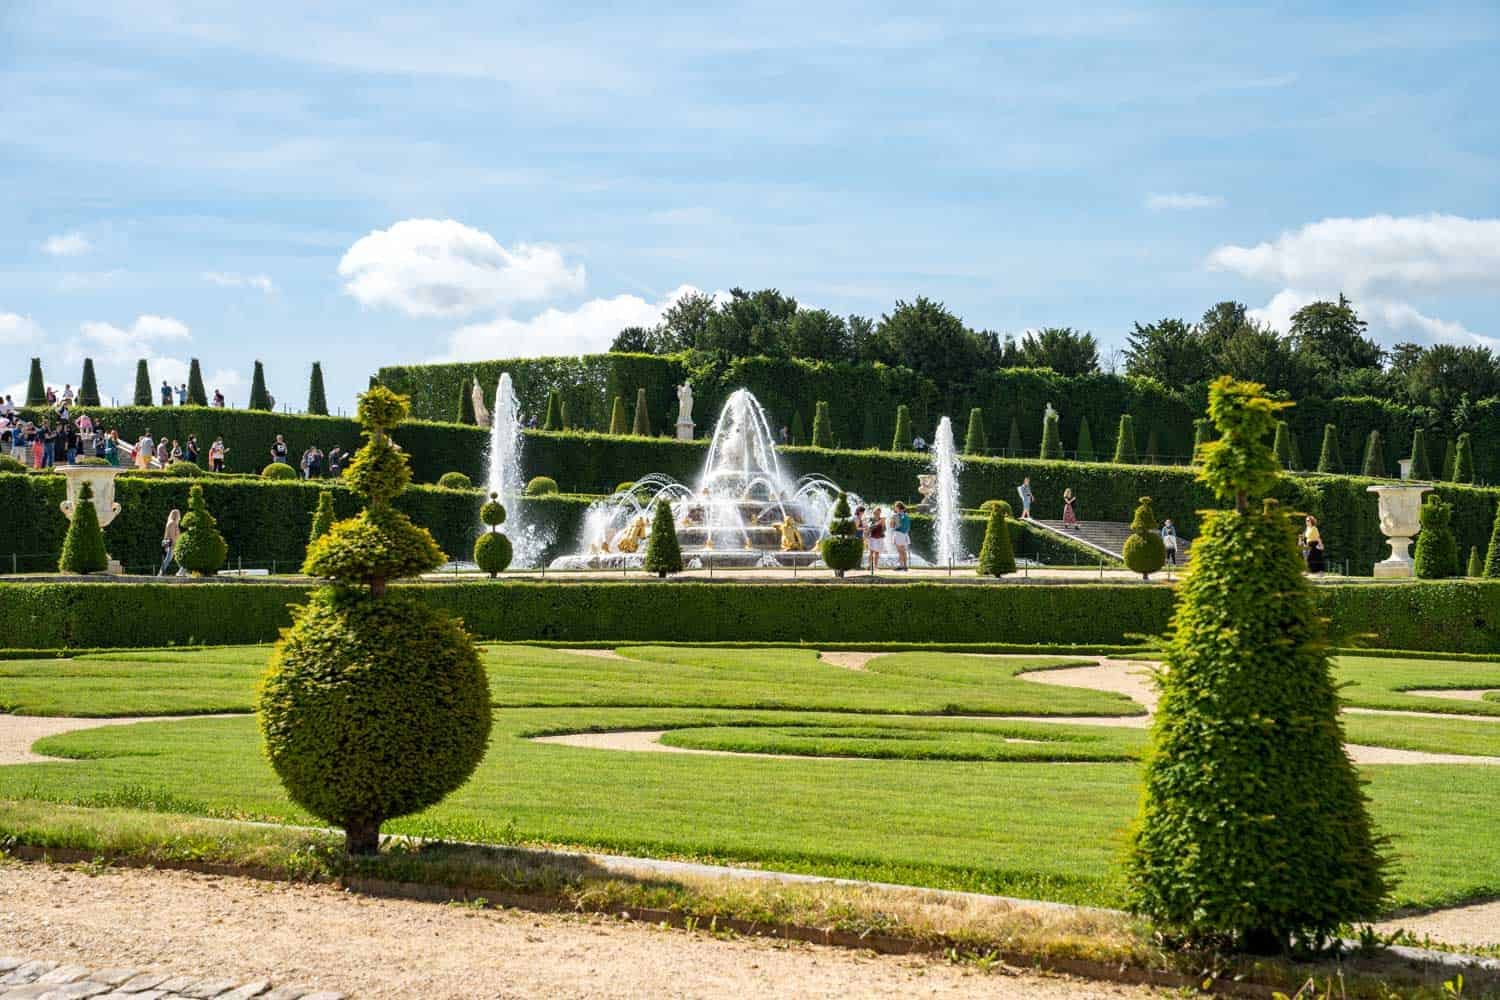 Main fountain in Gardens of Versailles